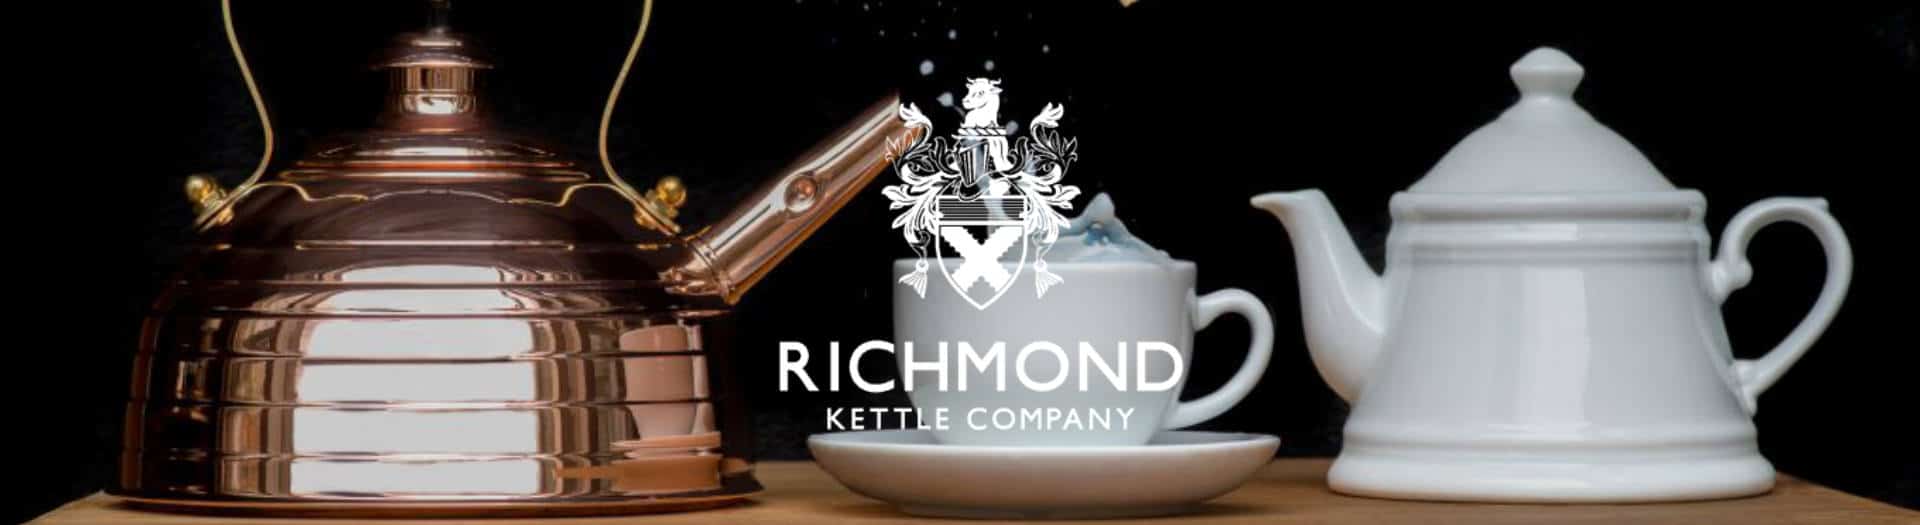 https://www.sirgordonbennett.com/wp-content/uploads/1920x525-Richmond-Kettle-Logo-header.jpg